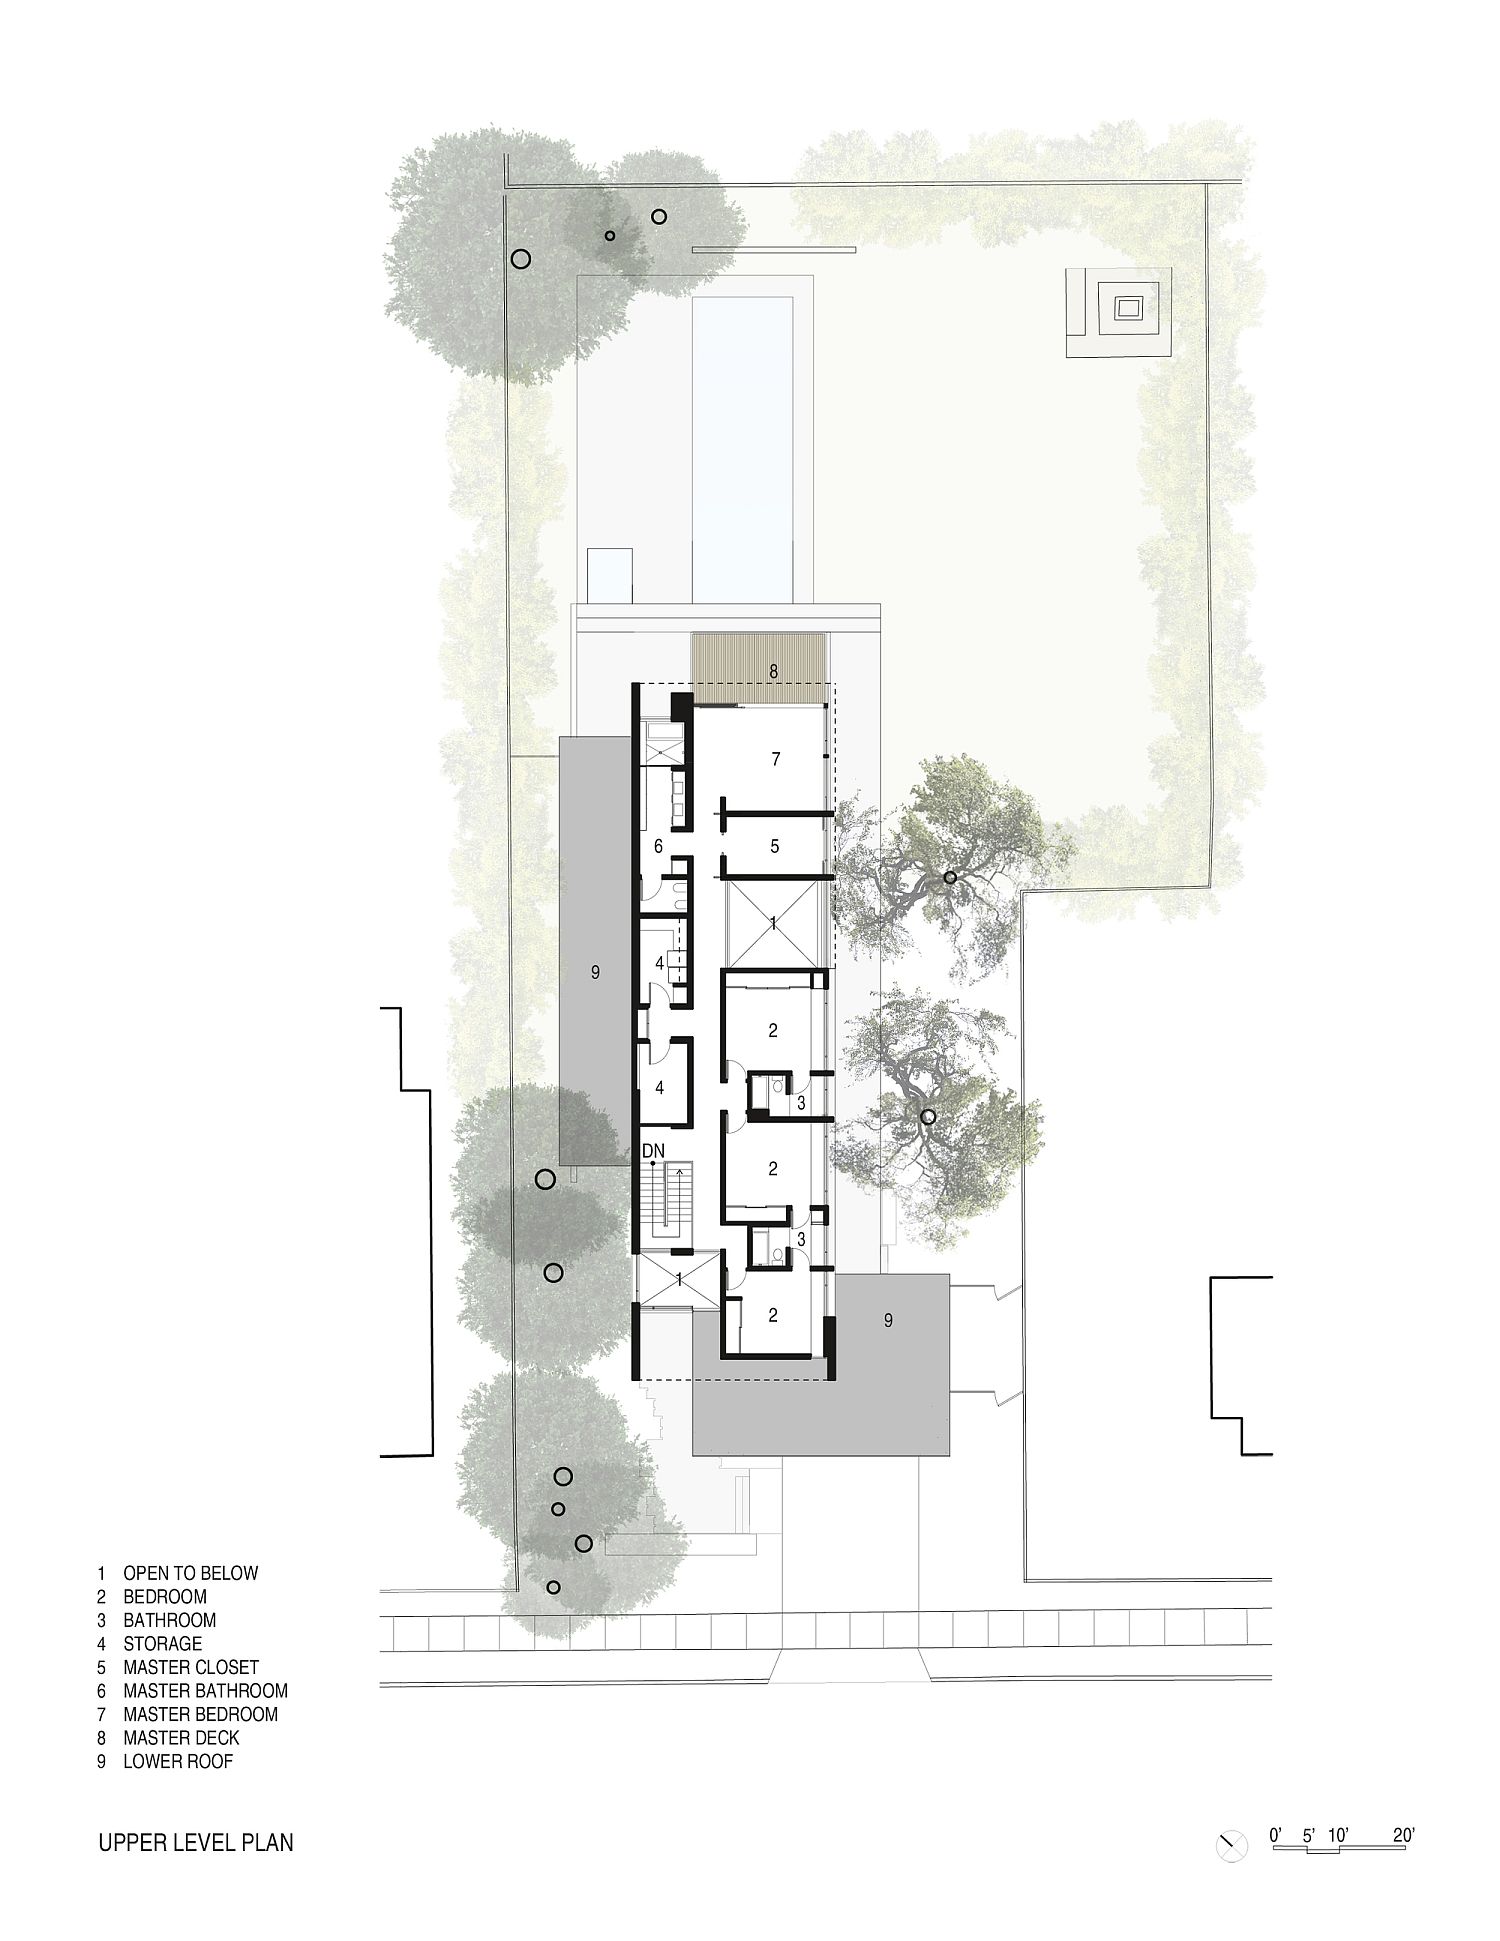 Upper level floor plan of Tree House in California